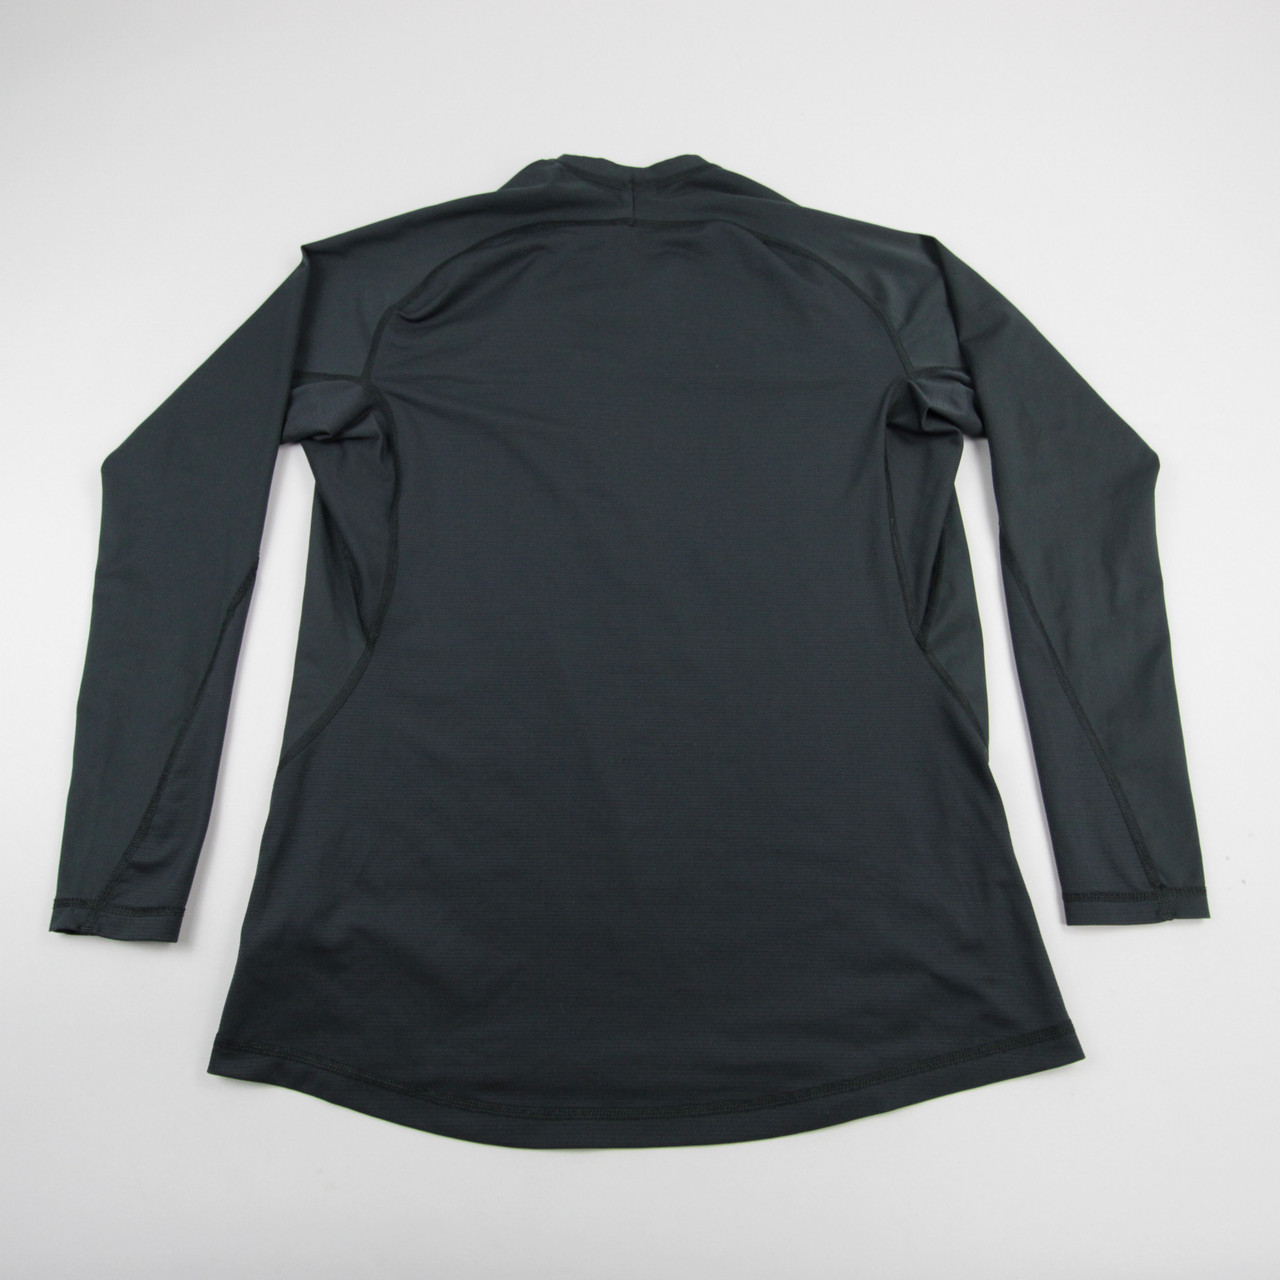 adidas Techfit Compression Short Sleeve Top - Mens Soccer XL Black